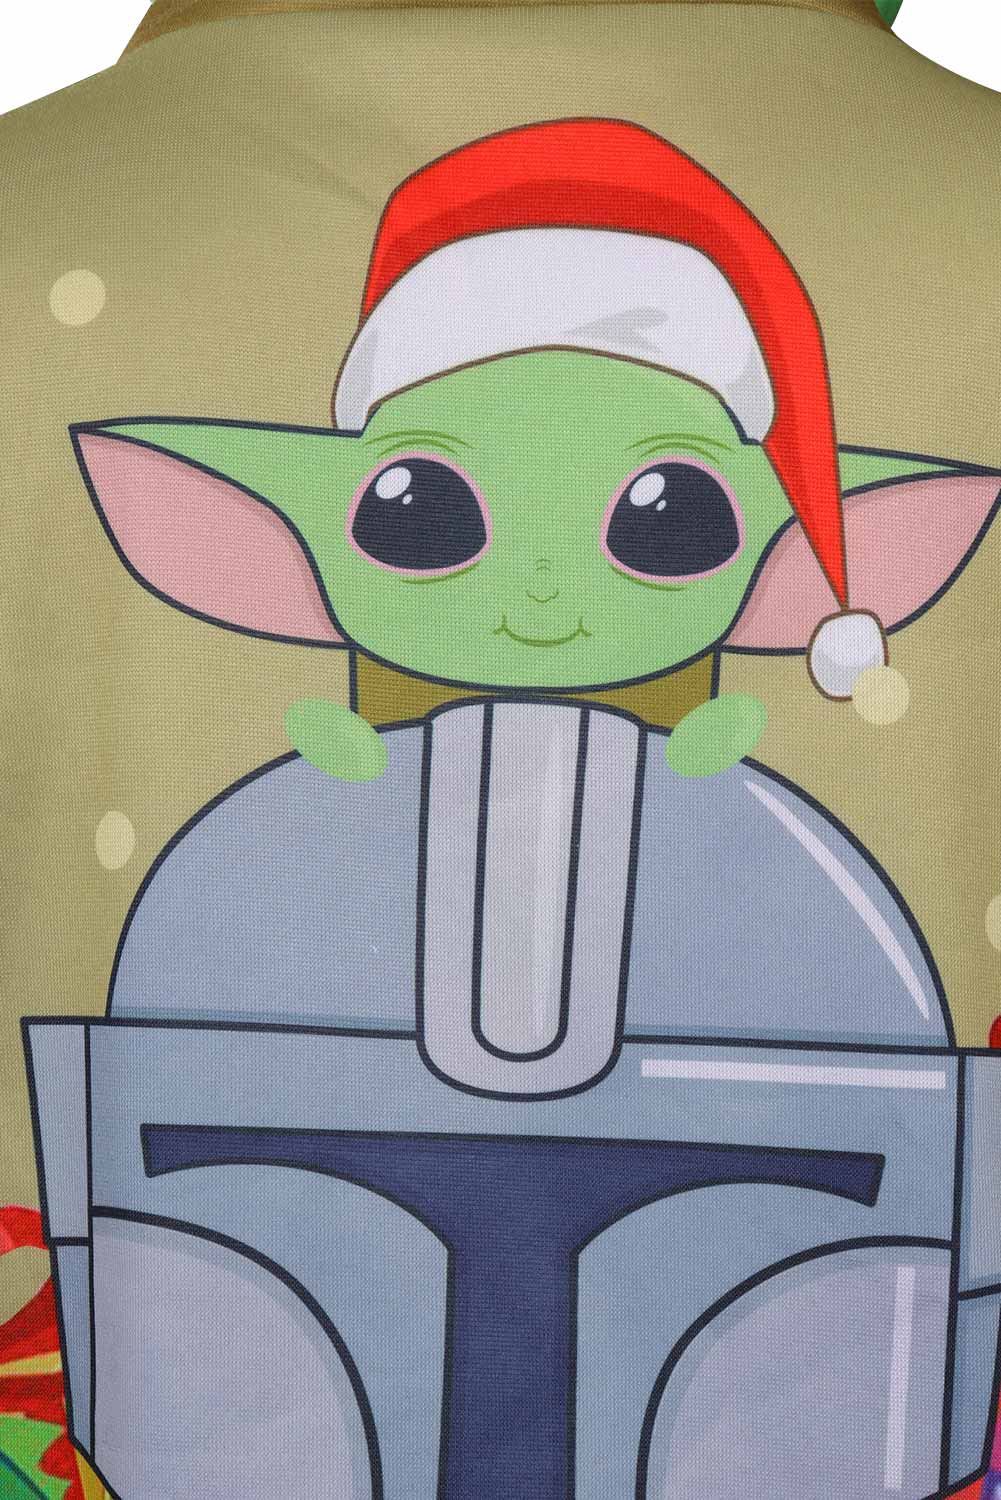 Déguisement Star Wars Yoda bébé Sweats à Capuche Design Original Cosplay Costume